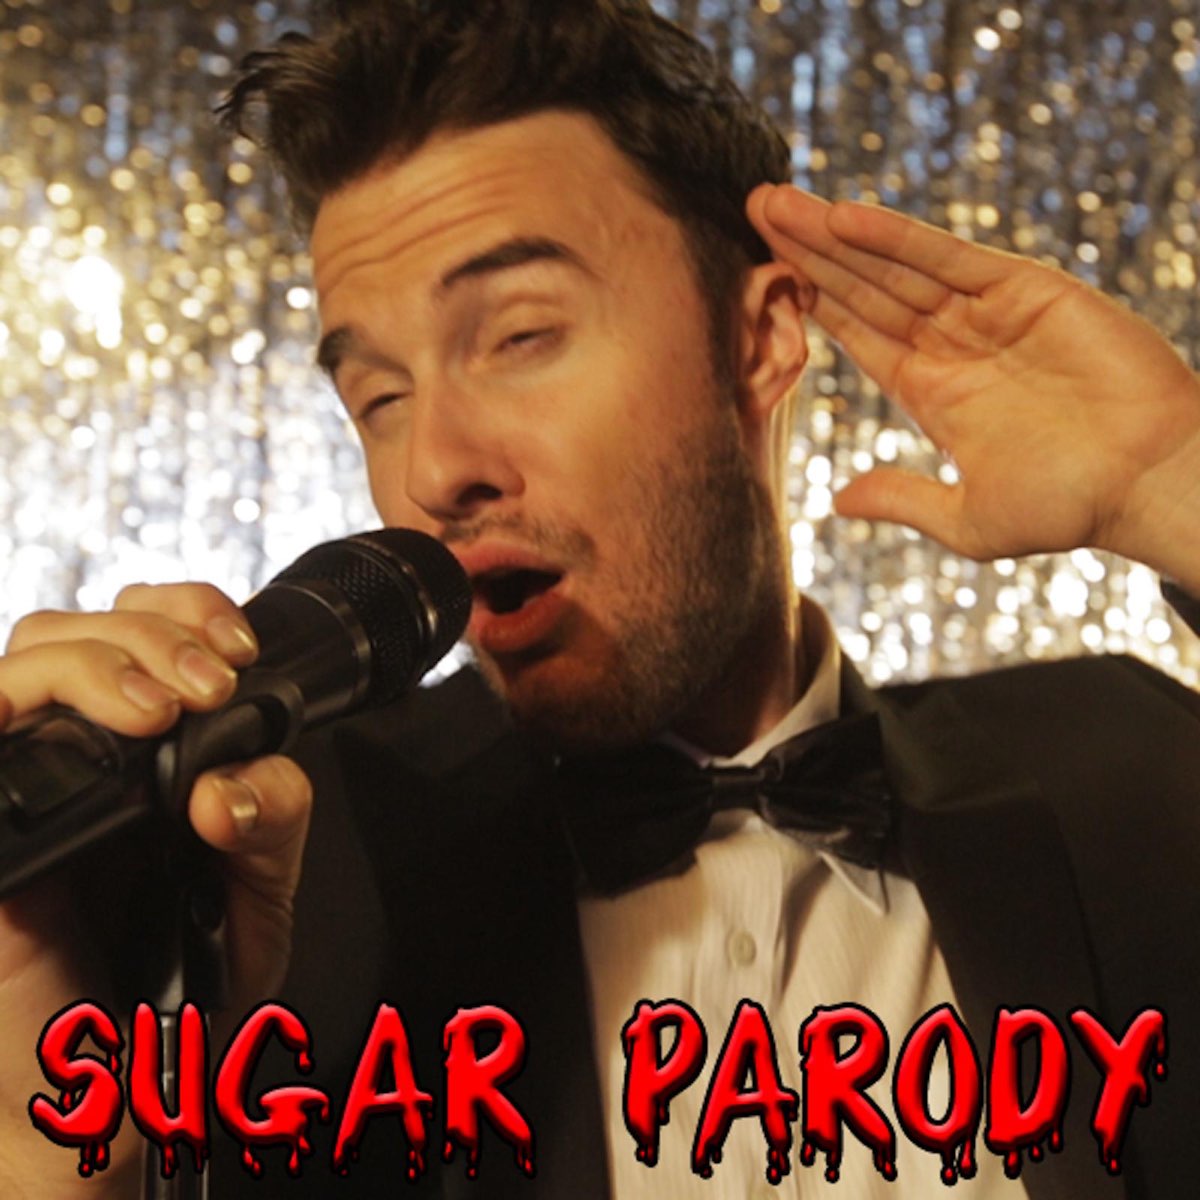 Песня пародия группа. Bart Baker Parody. Пародия Sugar. Maroon 5 Sugar. Bart Baker зеленоглазый пародист.